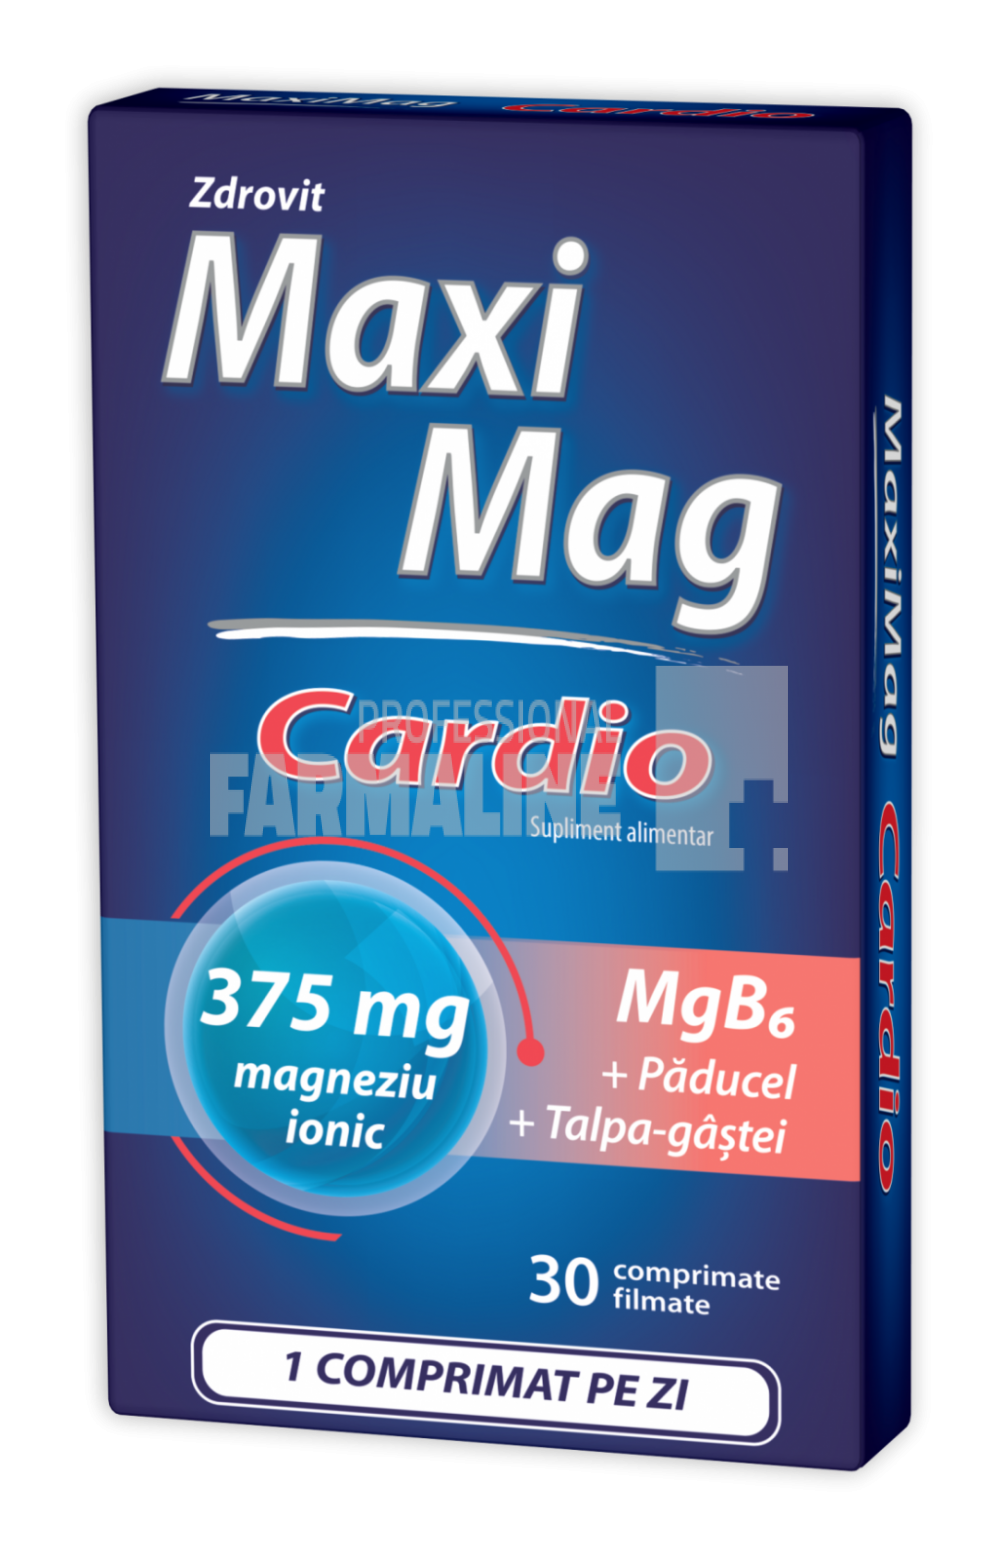 Zdrovit Maxi Mag cardio 30 comprimate